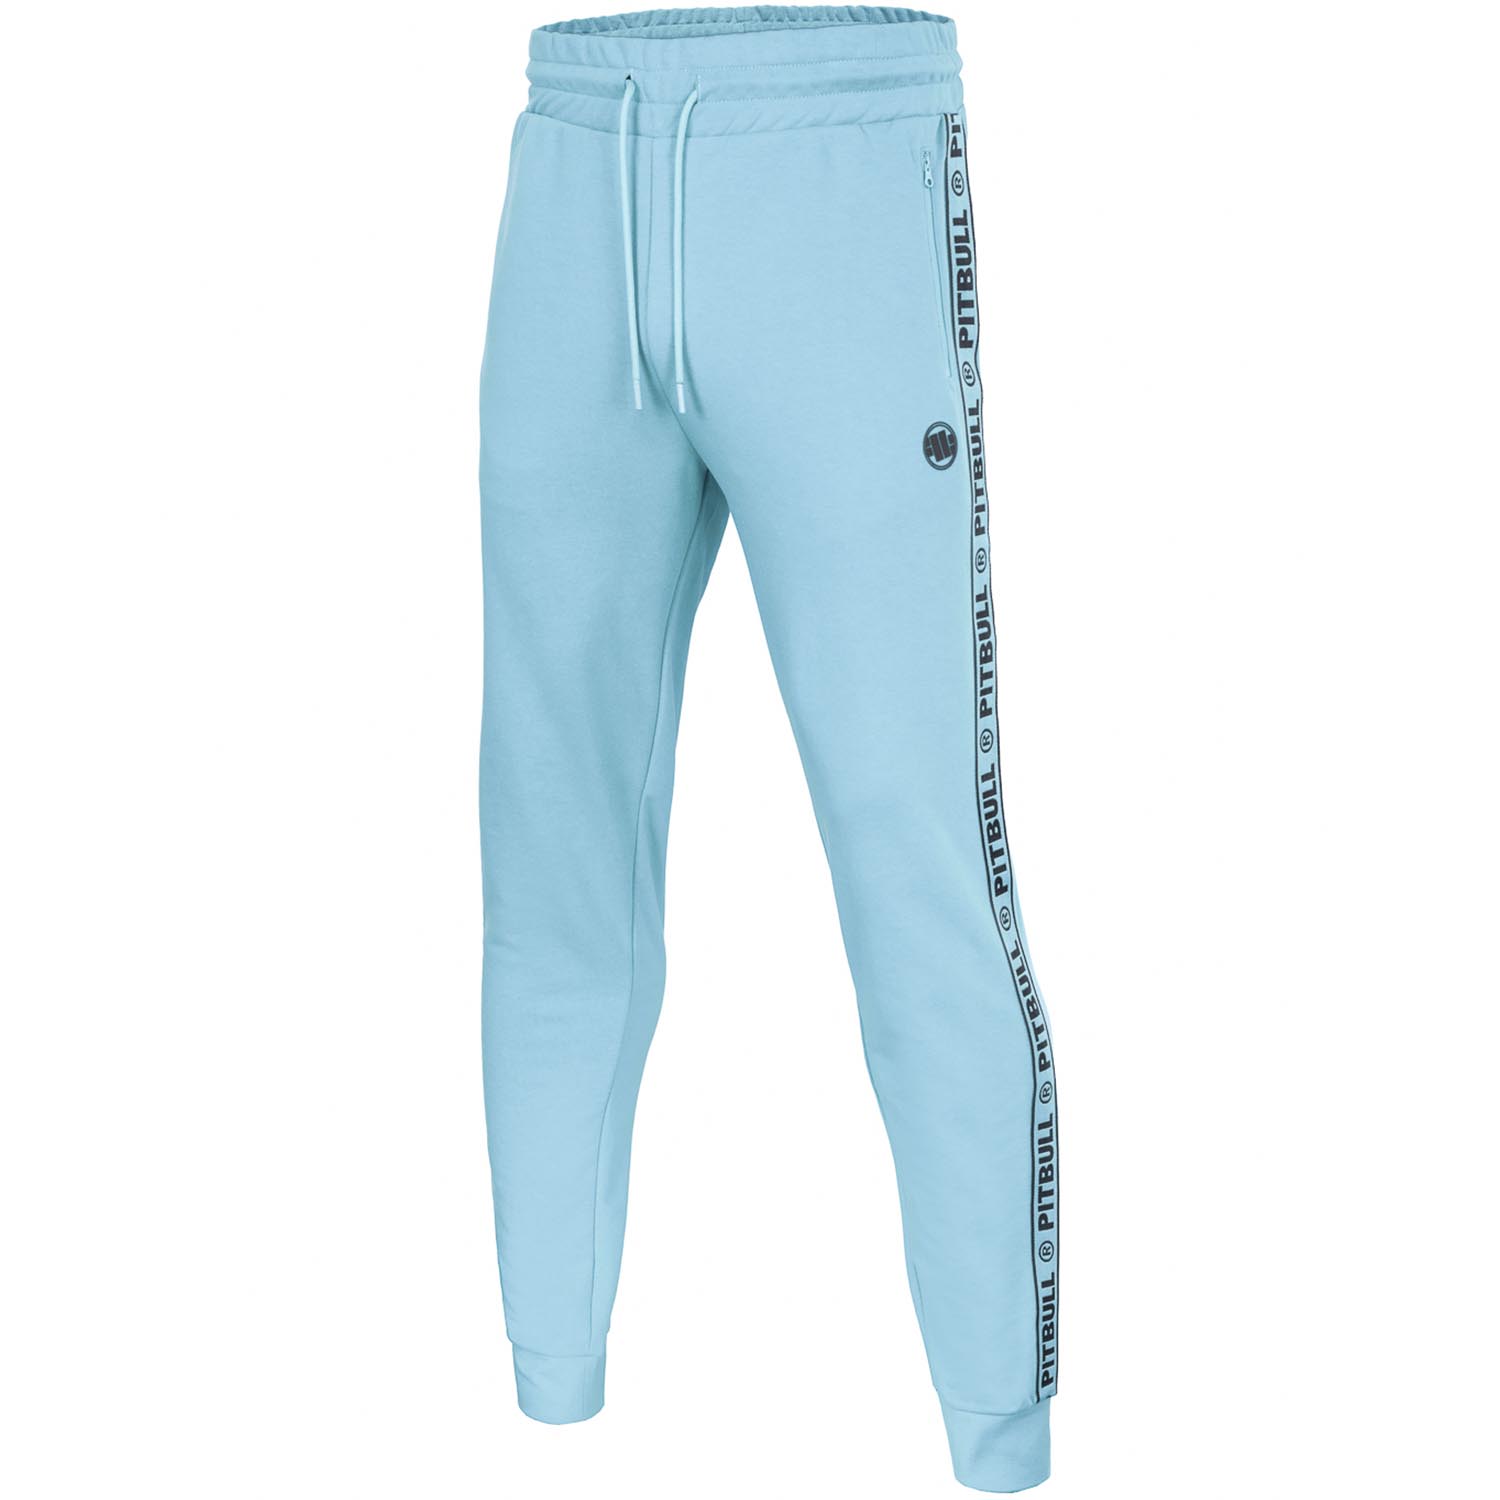 Pit Bull West Coast Jogging Pants, Meridan, light blue